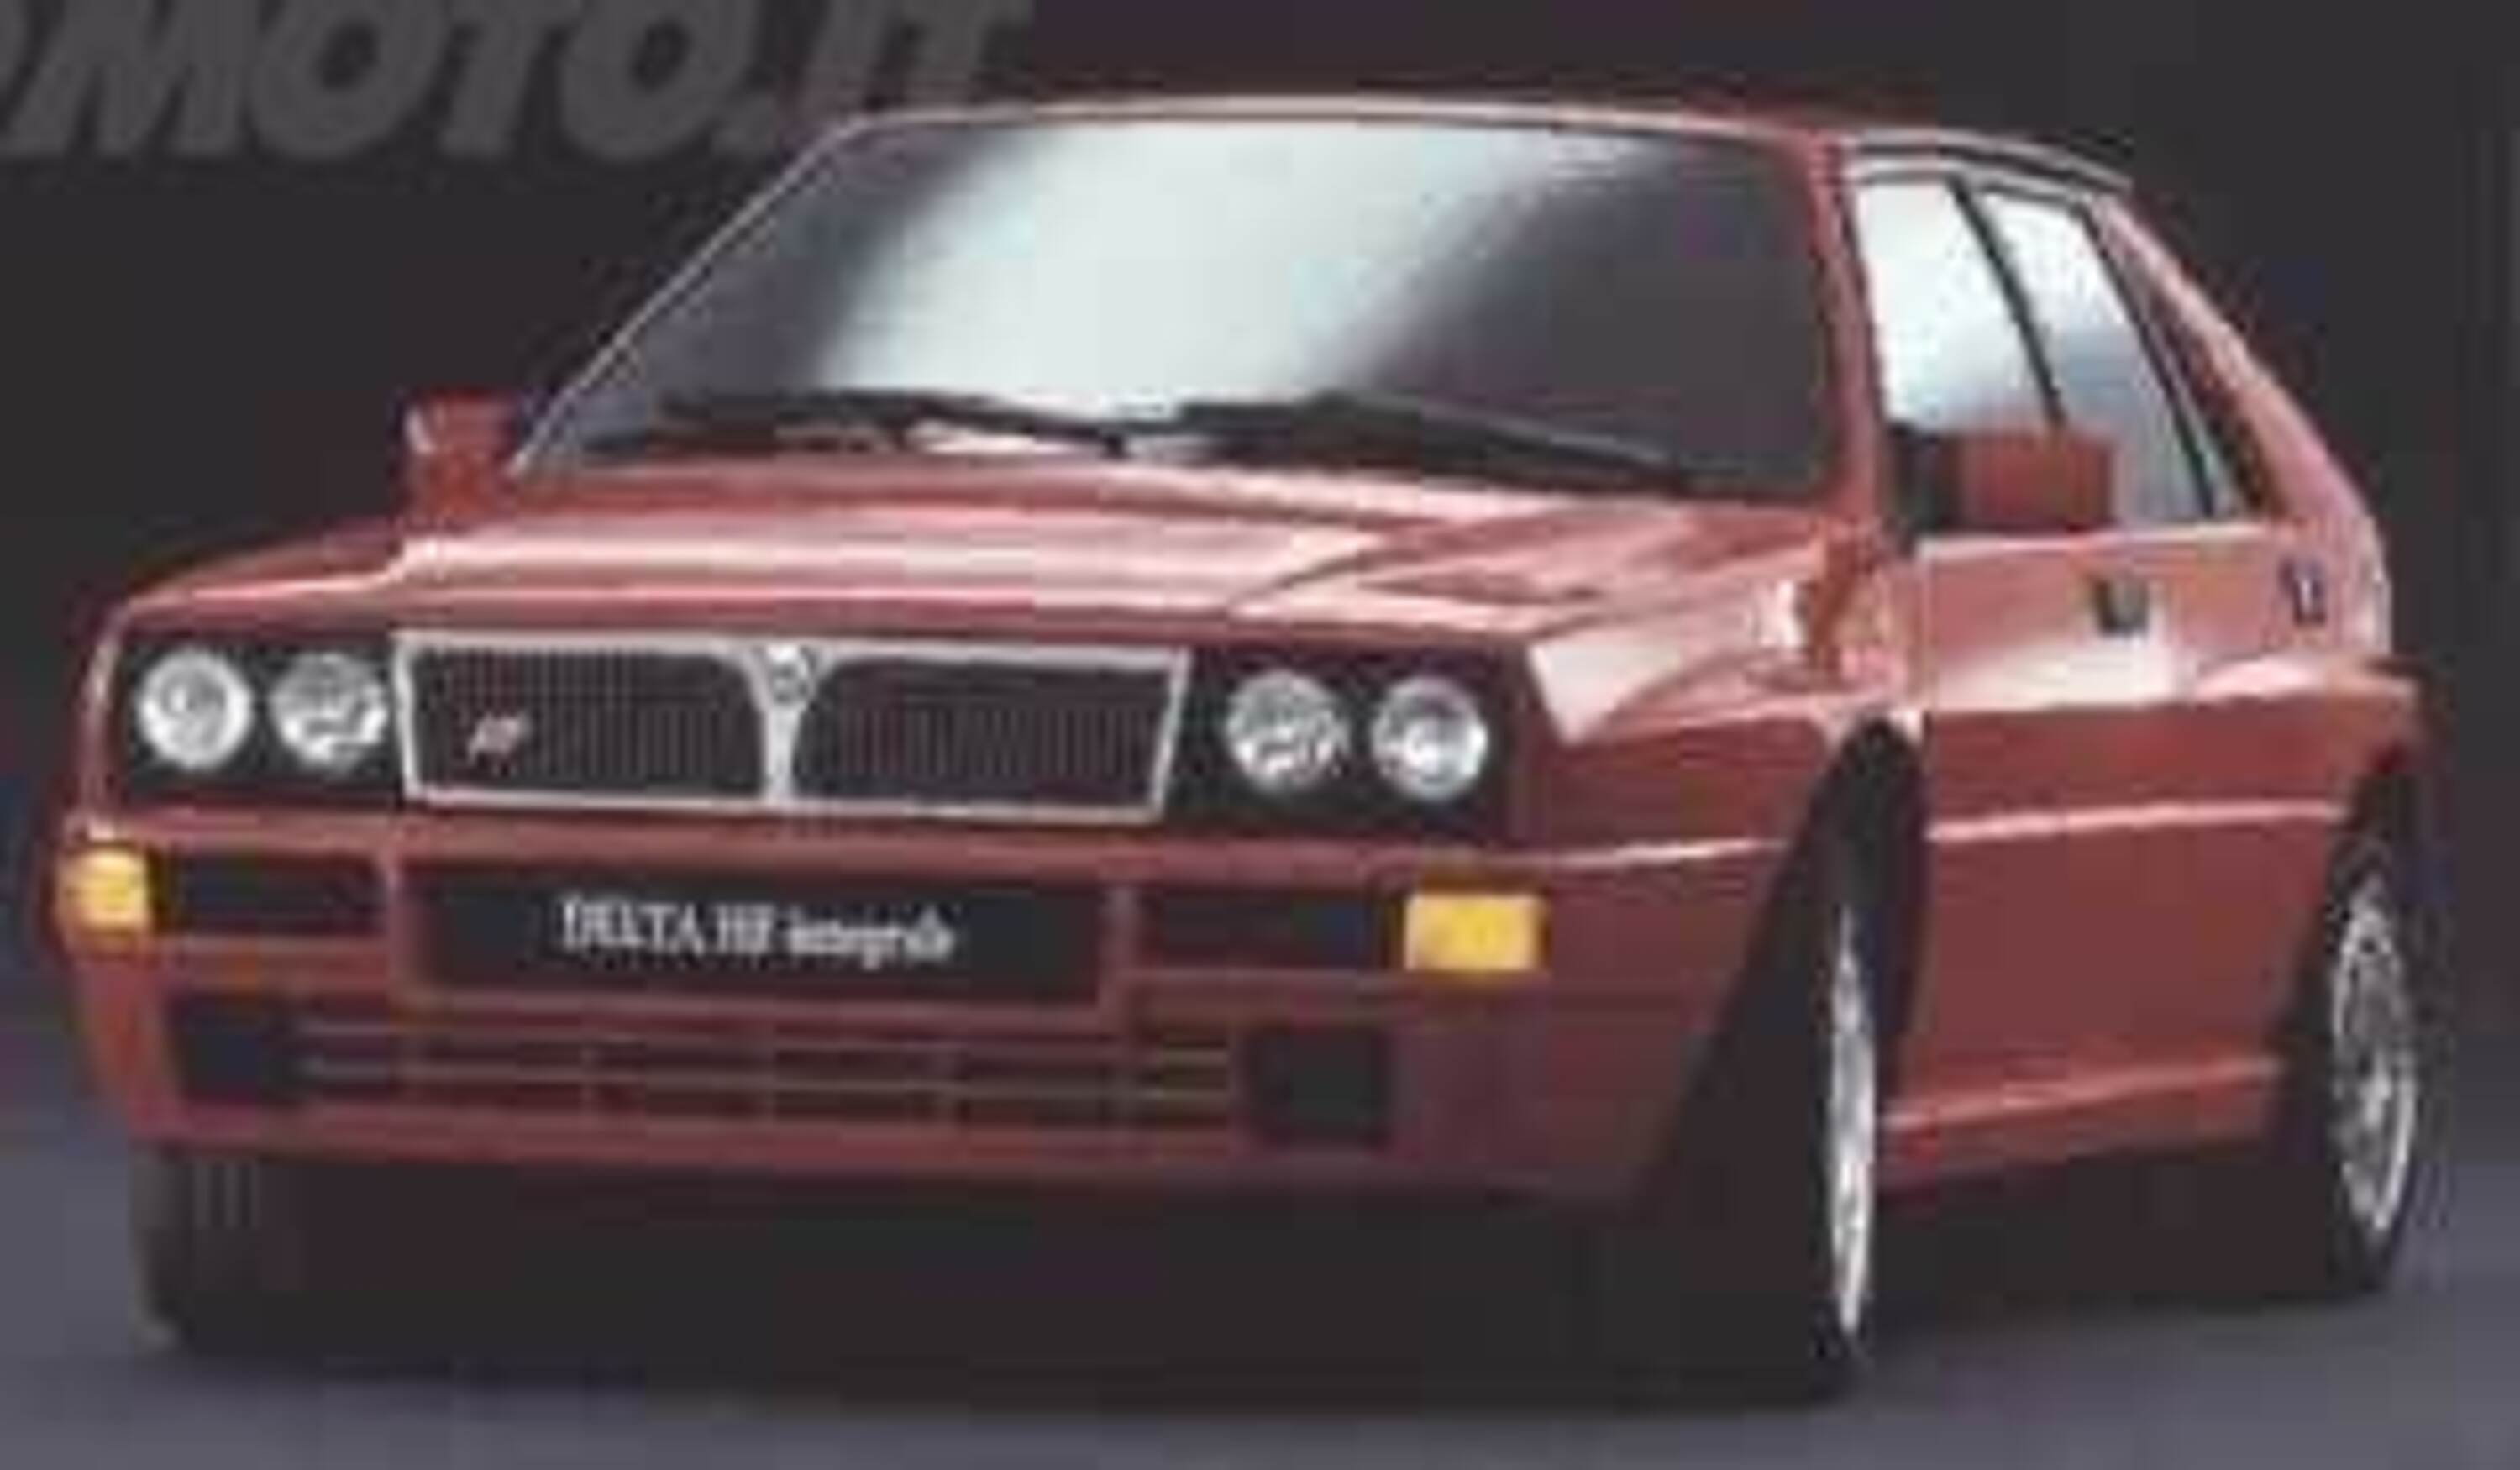 Lancia Delta turbo 16V HF integrale my 91